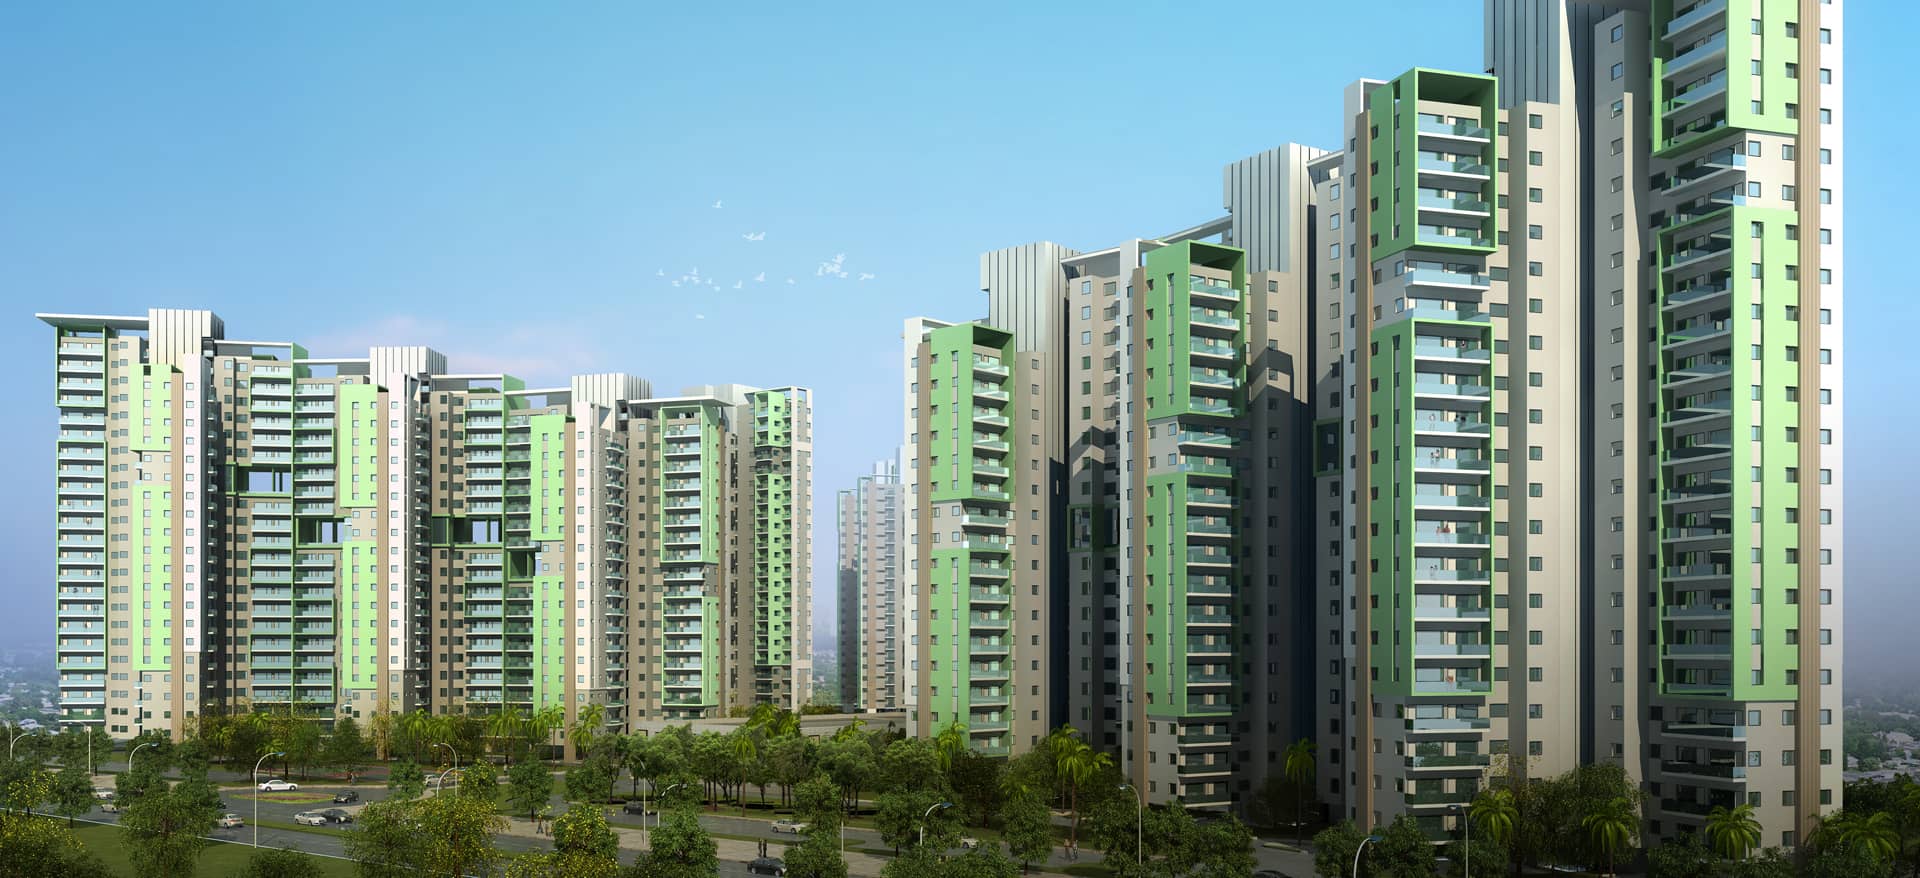 Sector M Group Housing Development, India